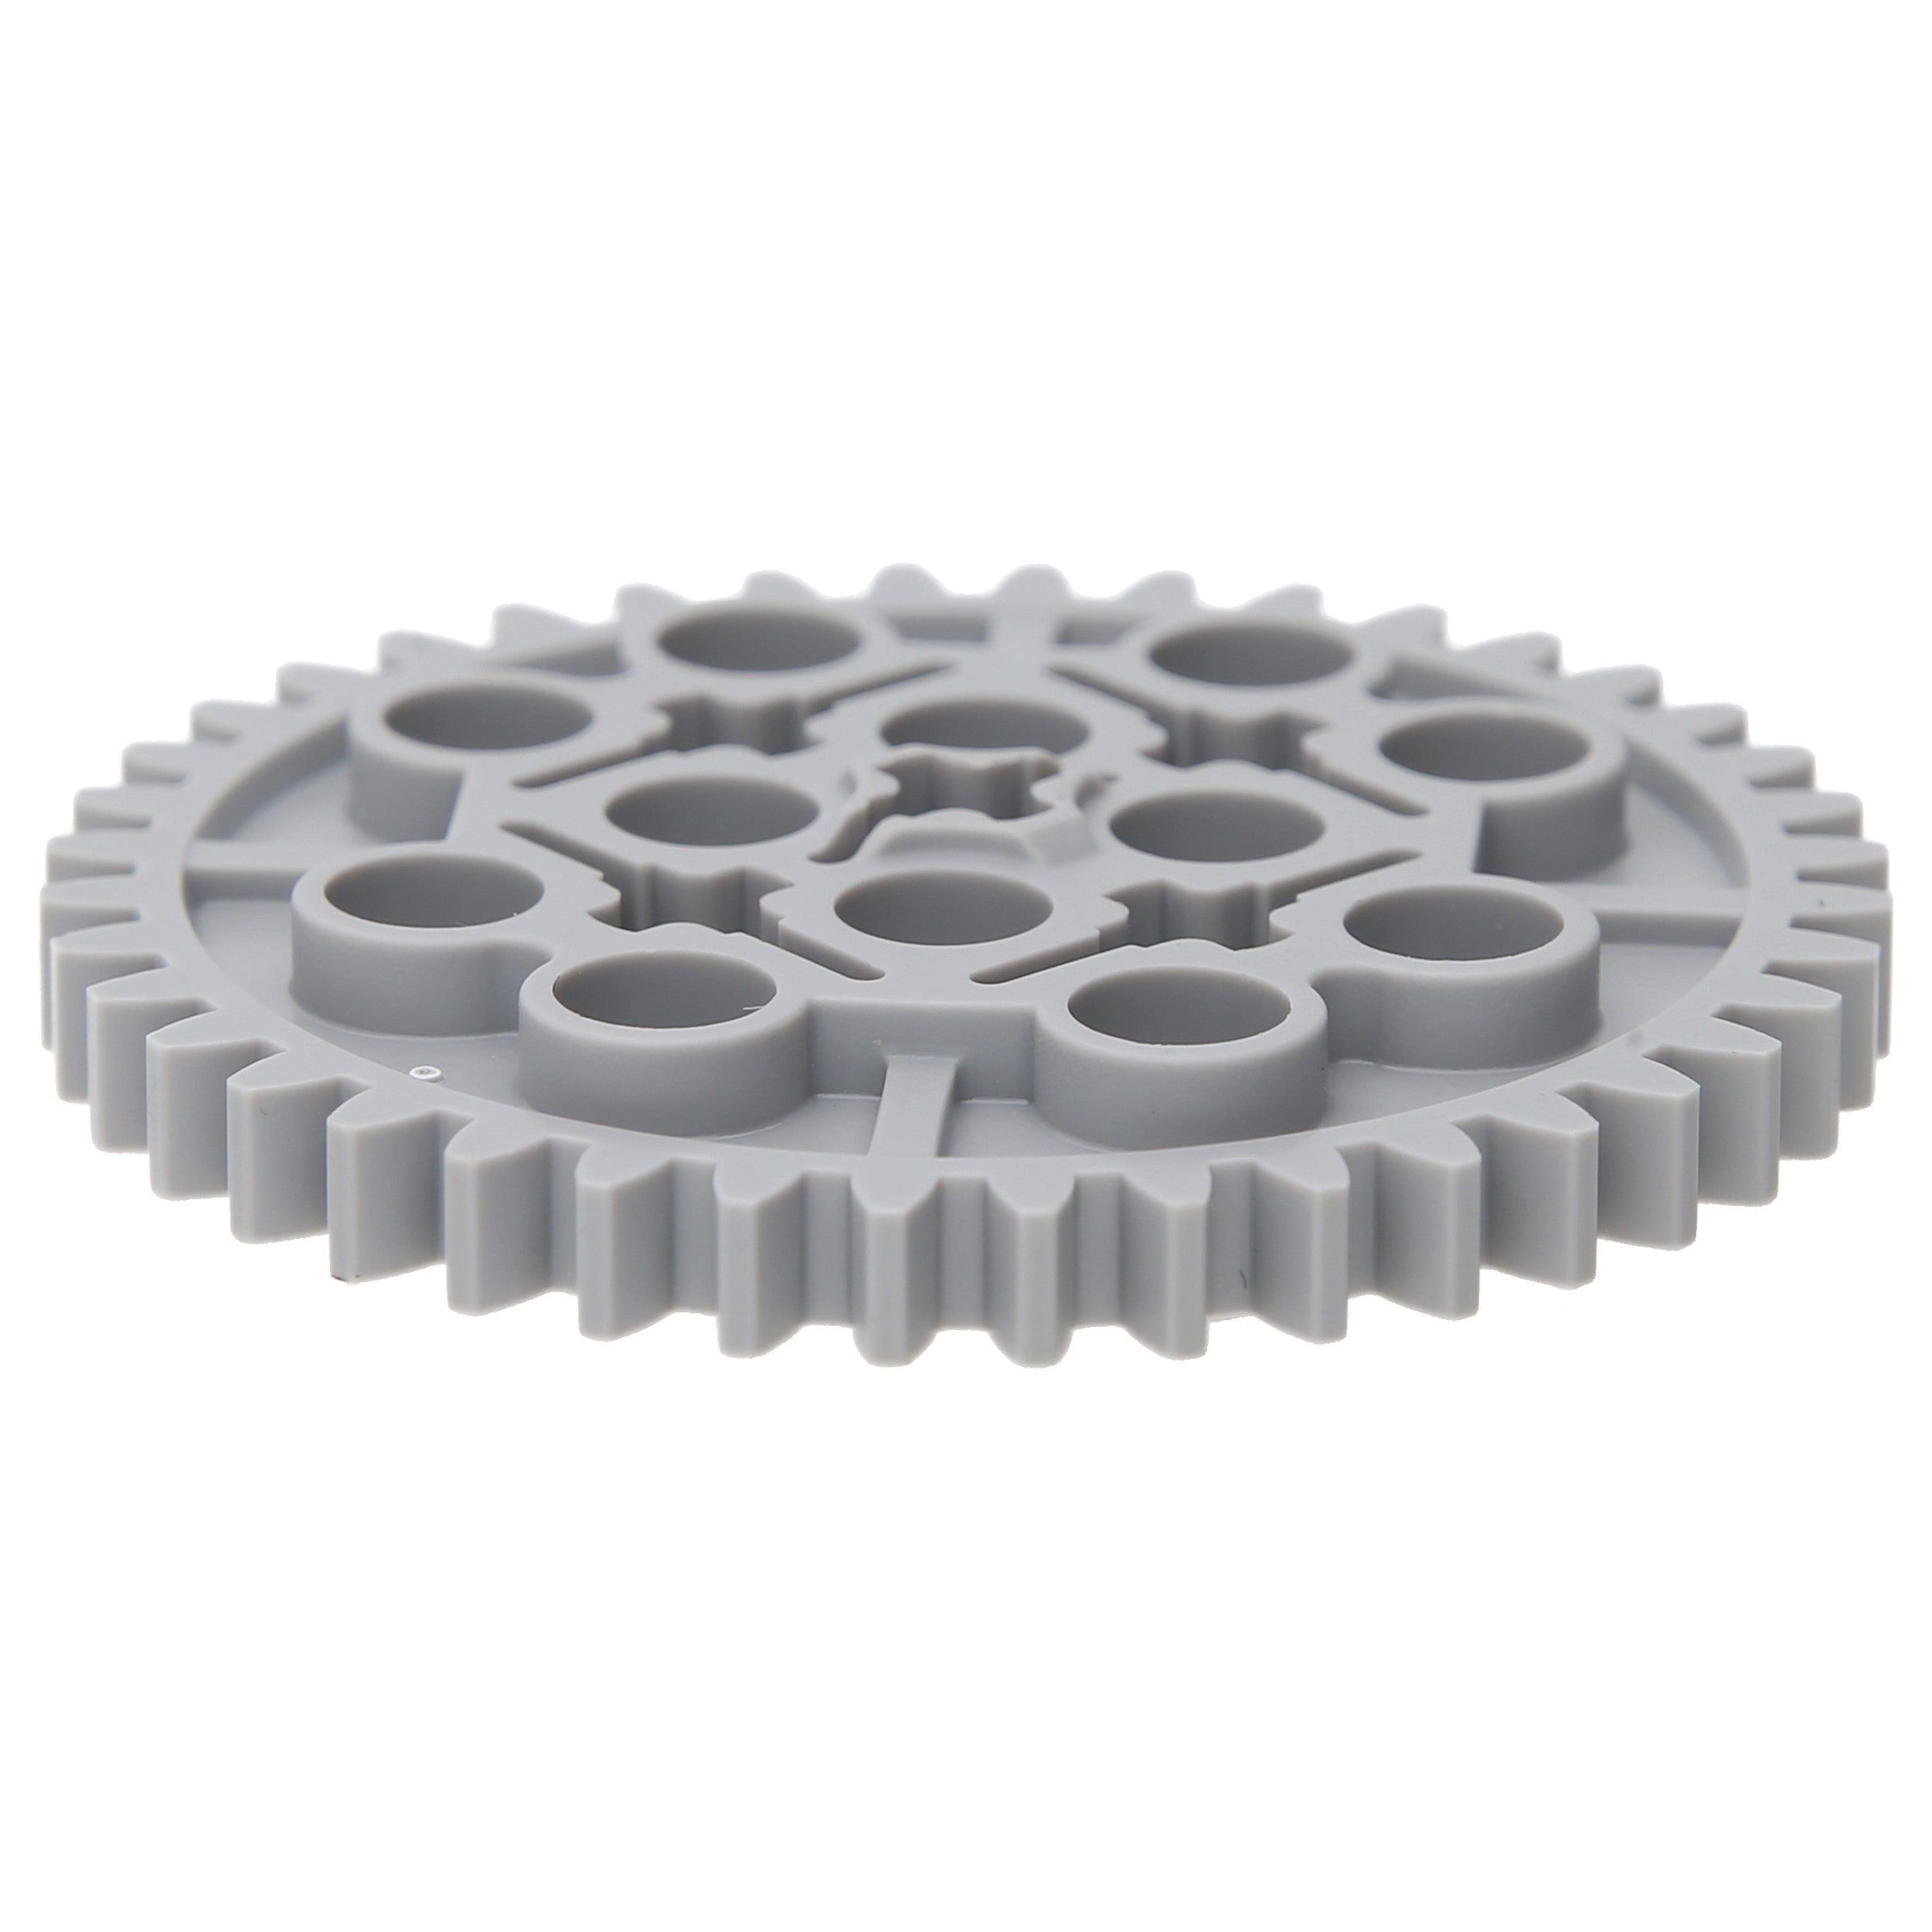 LEGO Technic Gears - Gear 40 teeth